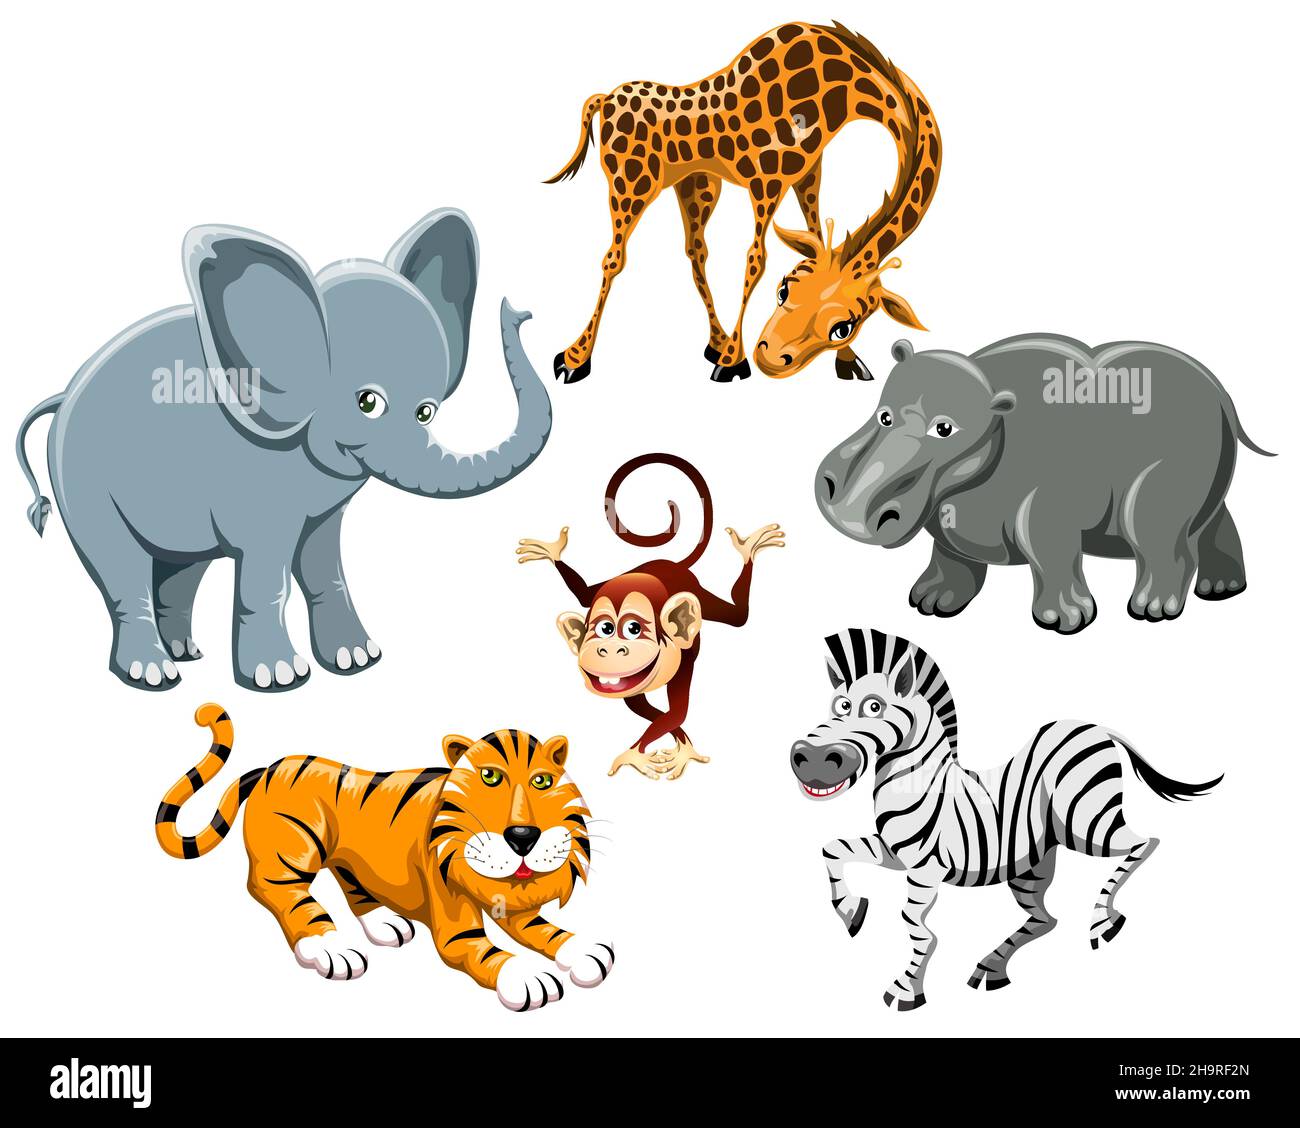 Set of Cartoon Wild Animals isolated on white. Giraffe, elephant, tiger, zebra, monkey, river-horse. Vector illustration. Stock Vector